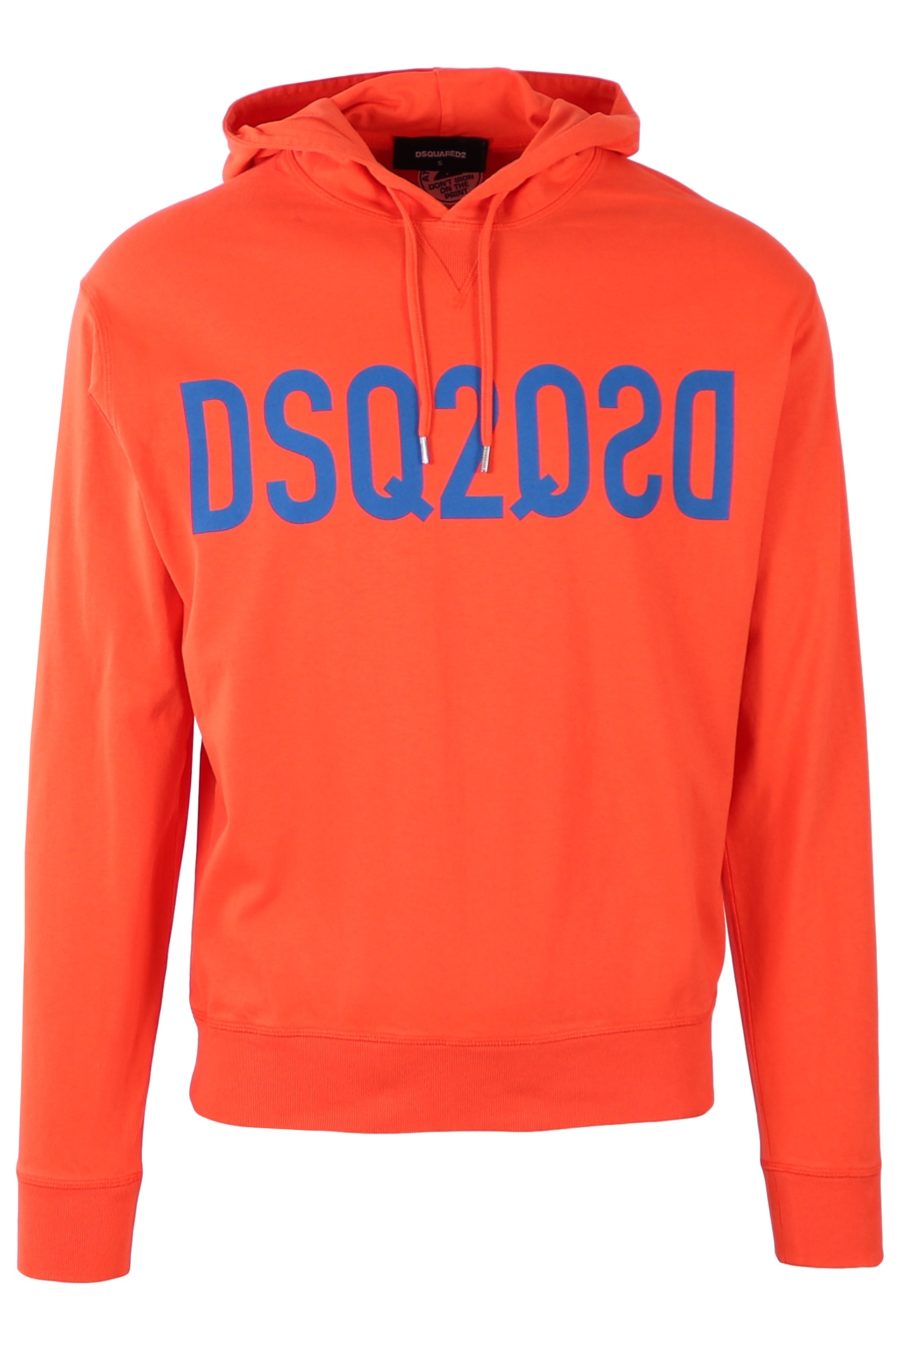 Sweatshirt Dsquared2 orange mit blauem Logo - e8f5f1934ec26518f9328906404ef67dac07882b